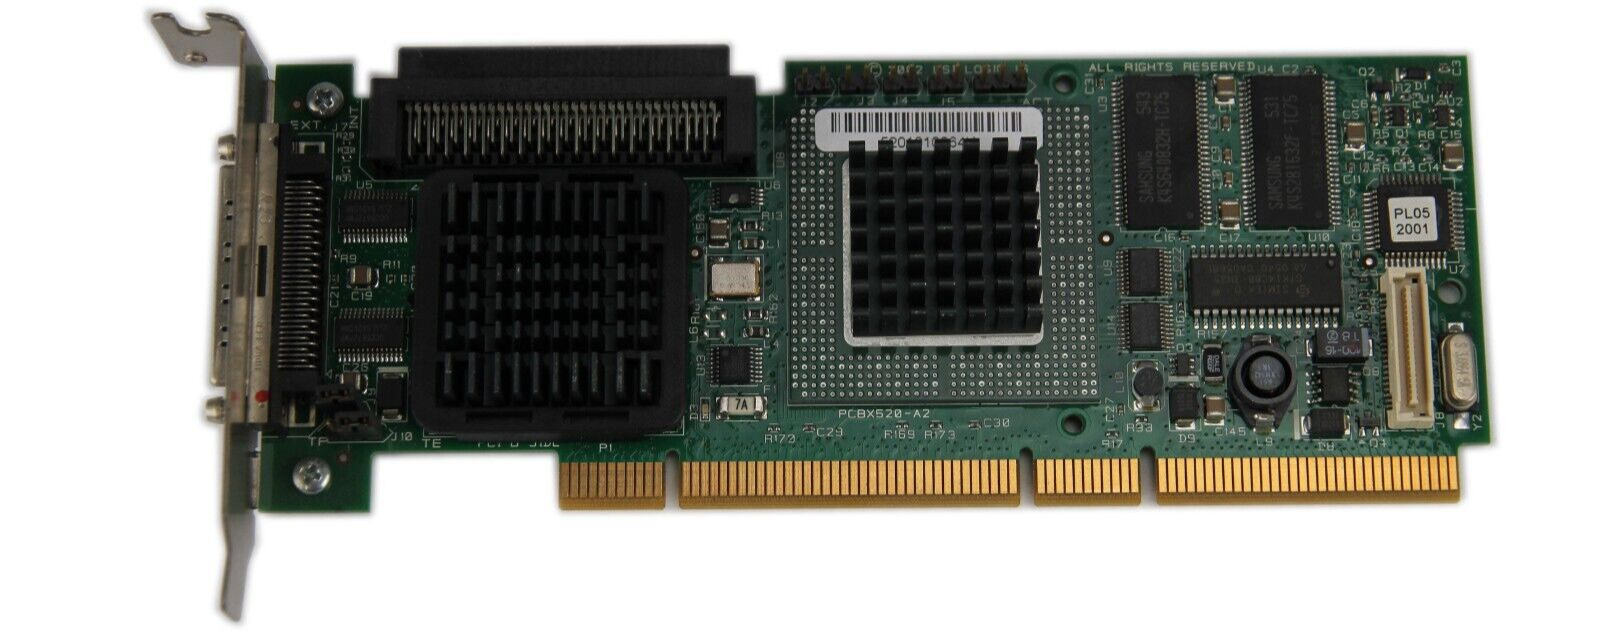 LSI Logic PCBX520-A2 LSI LOGIC 64MB PCI SCSI RAID CONTROLLER (Low Profile)